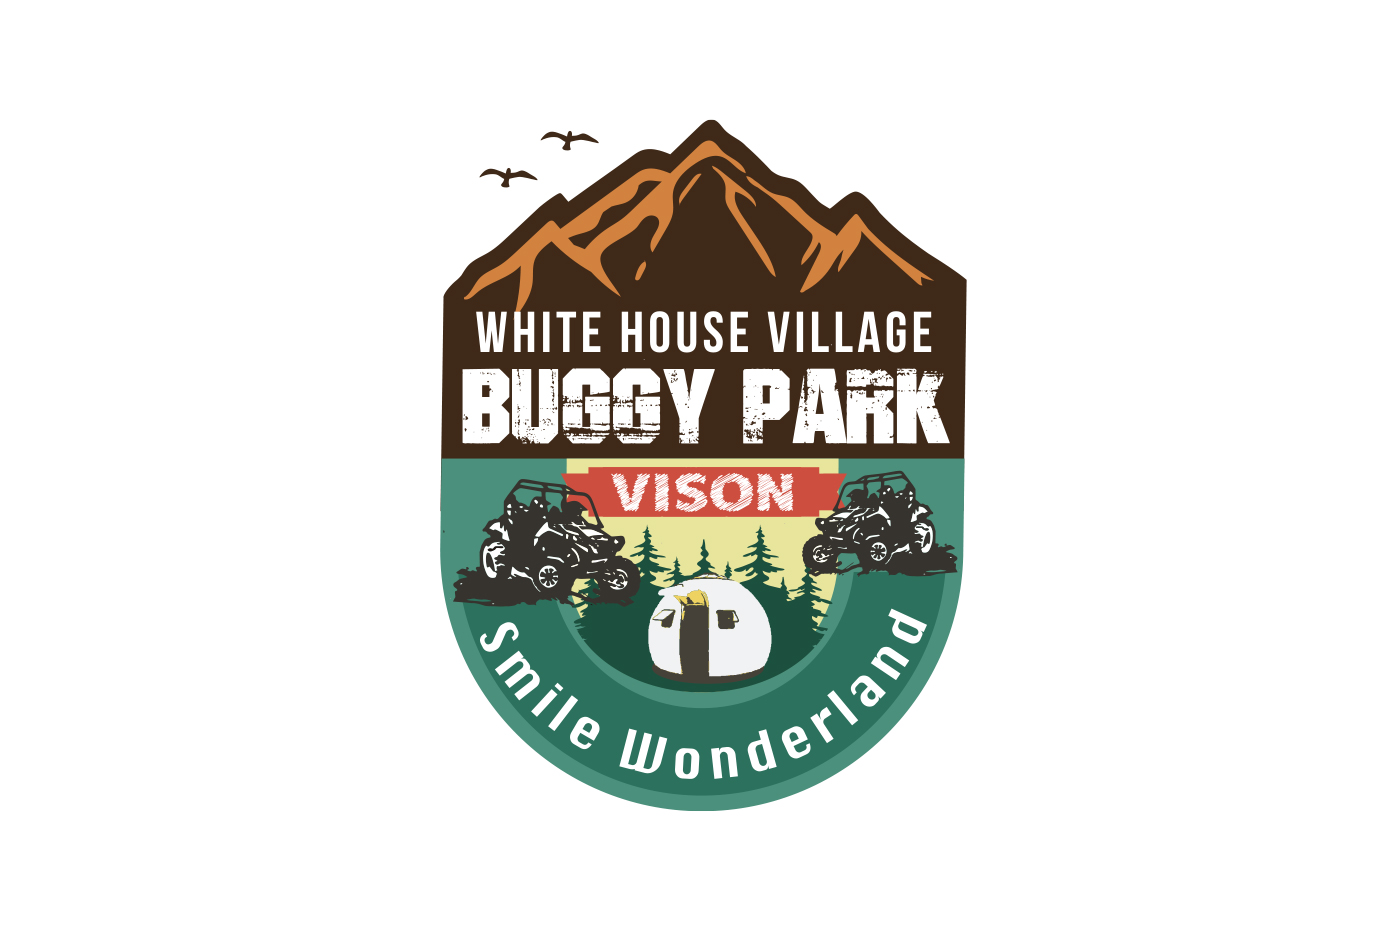 White House Village ”Buggy Park”